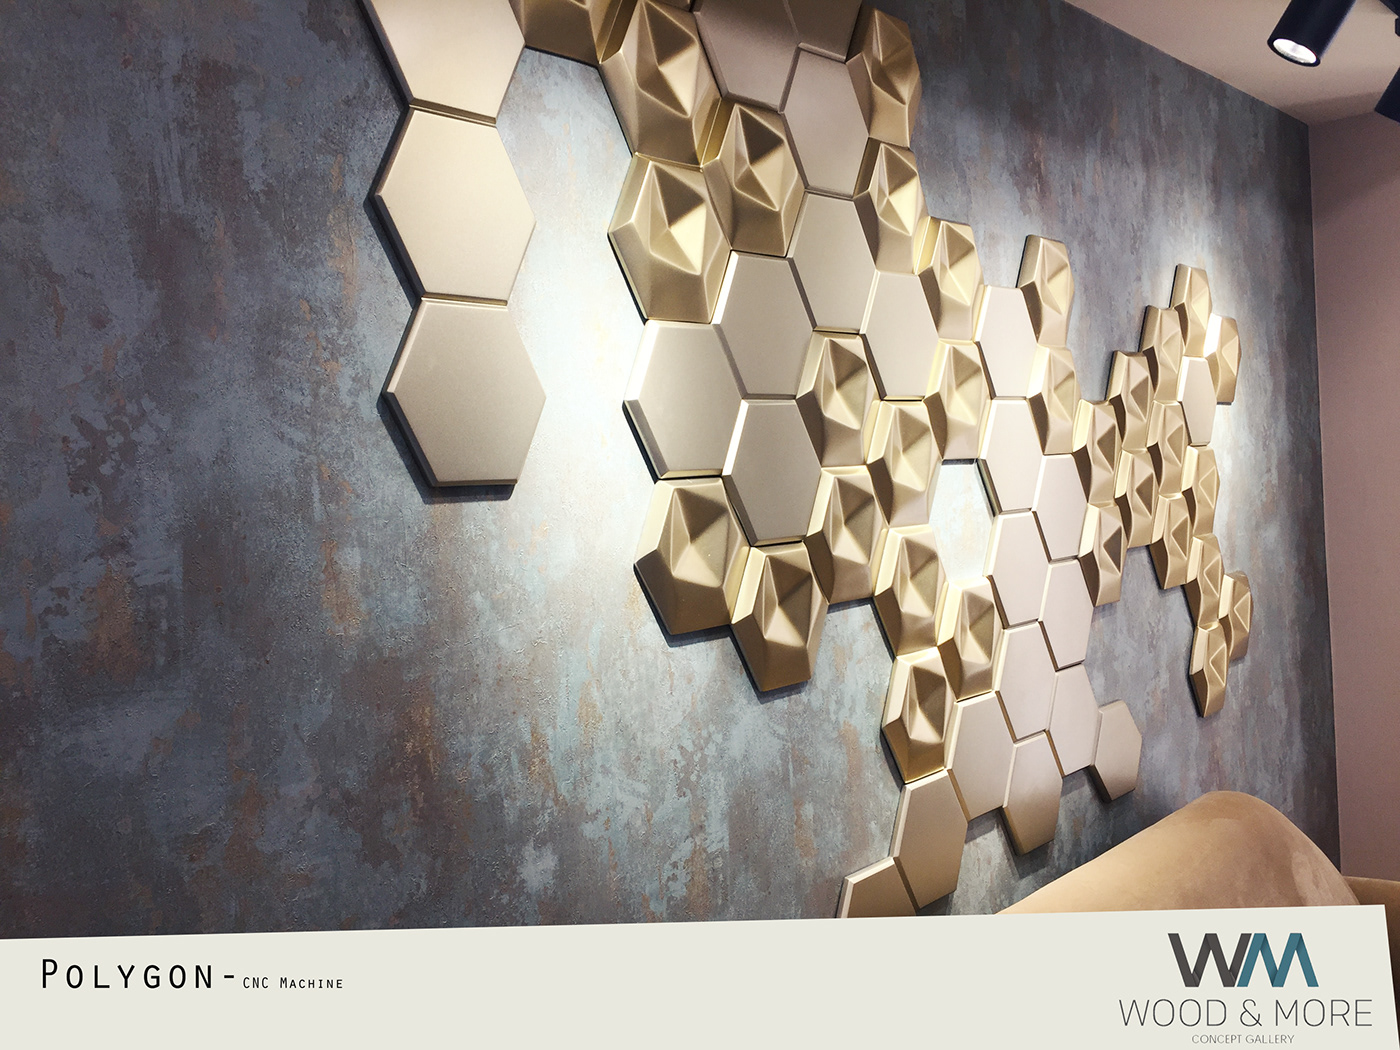 3D 3d modeling architecture home decor interior design  wall art